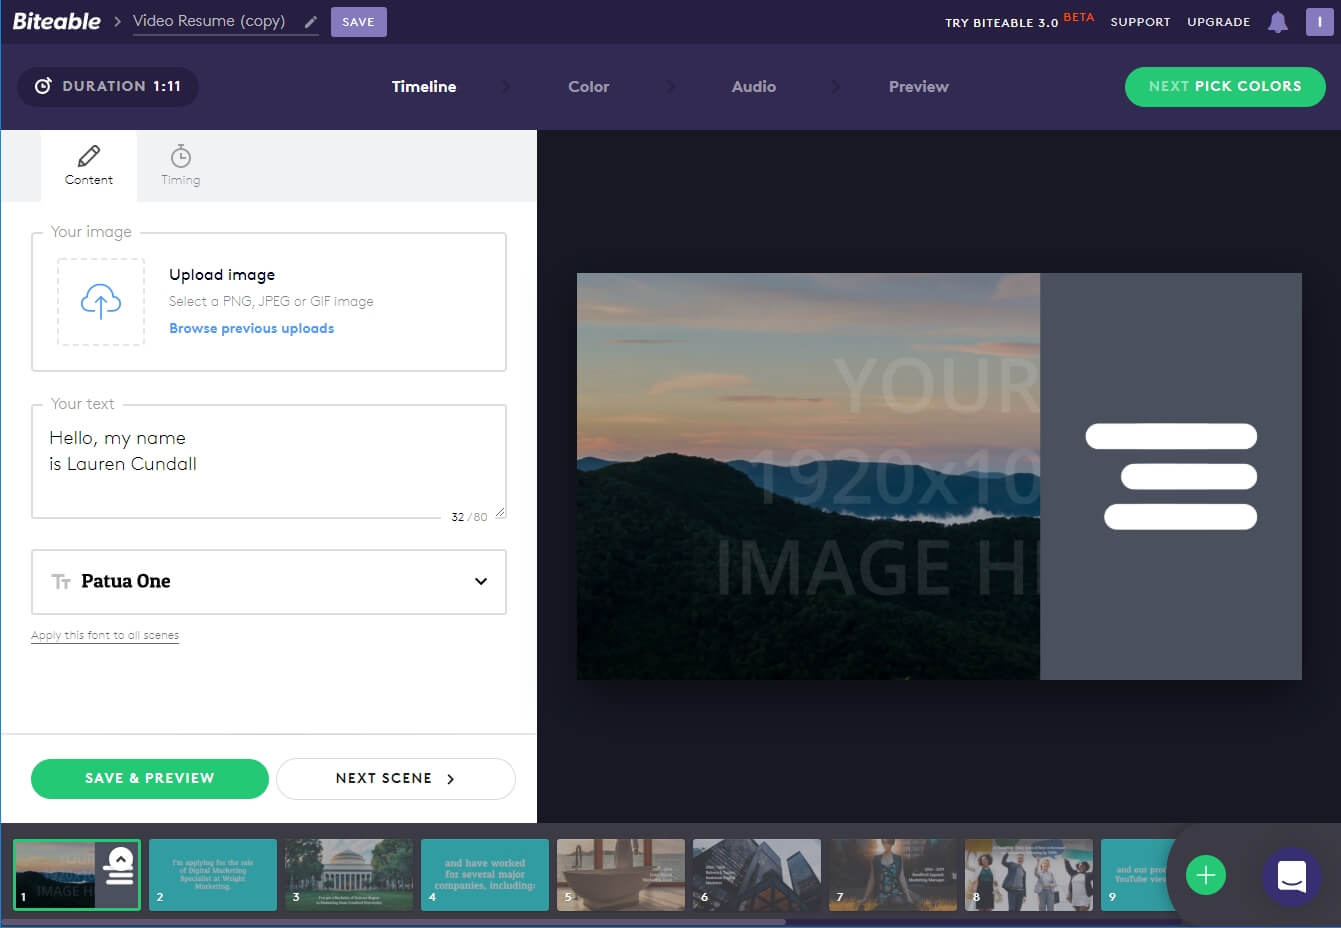 pembuat video resume terbaik-interface Biteable video resume